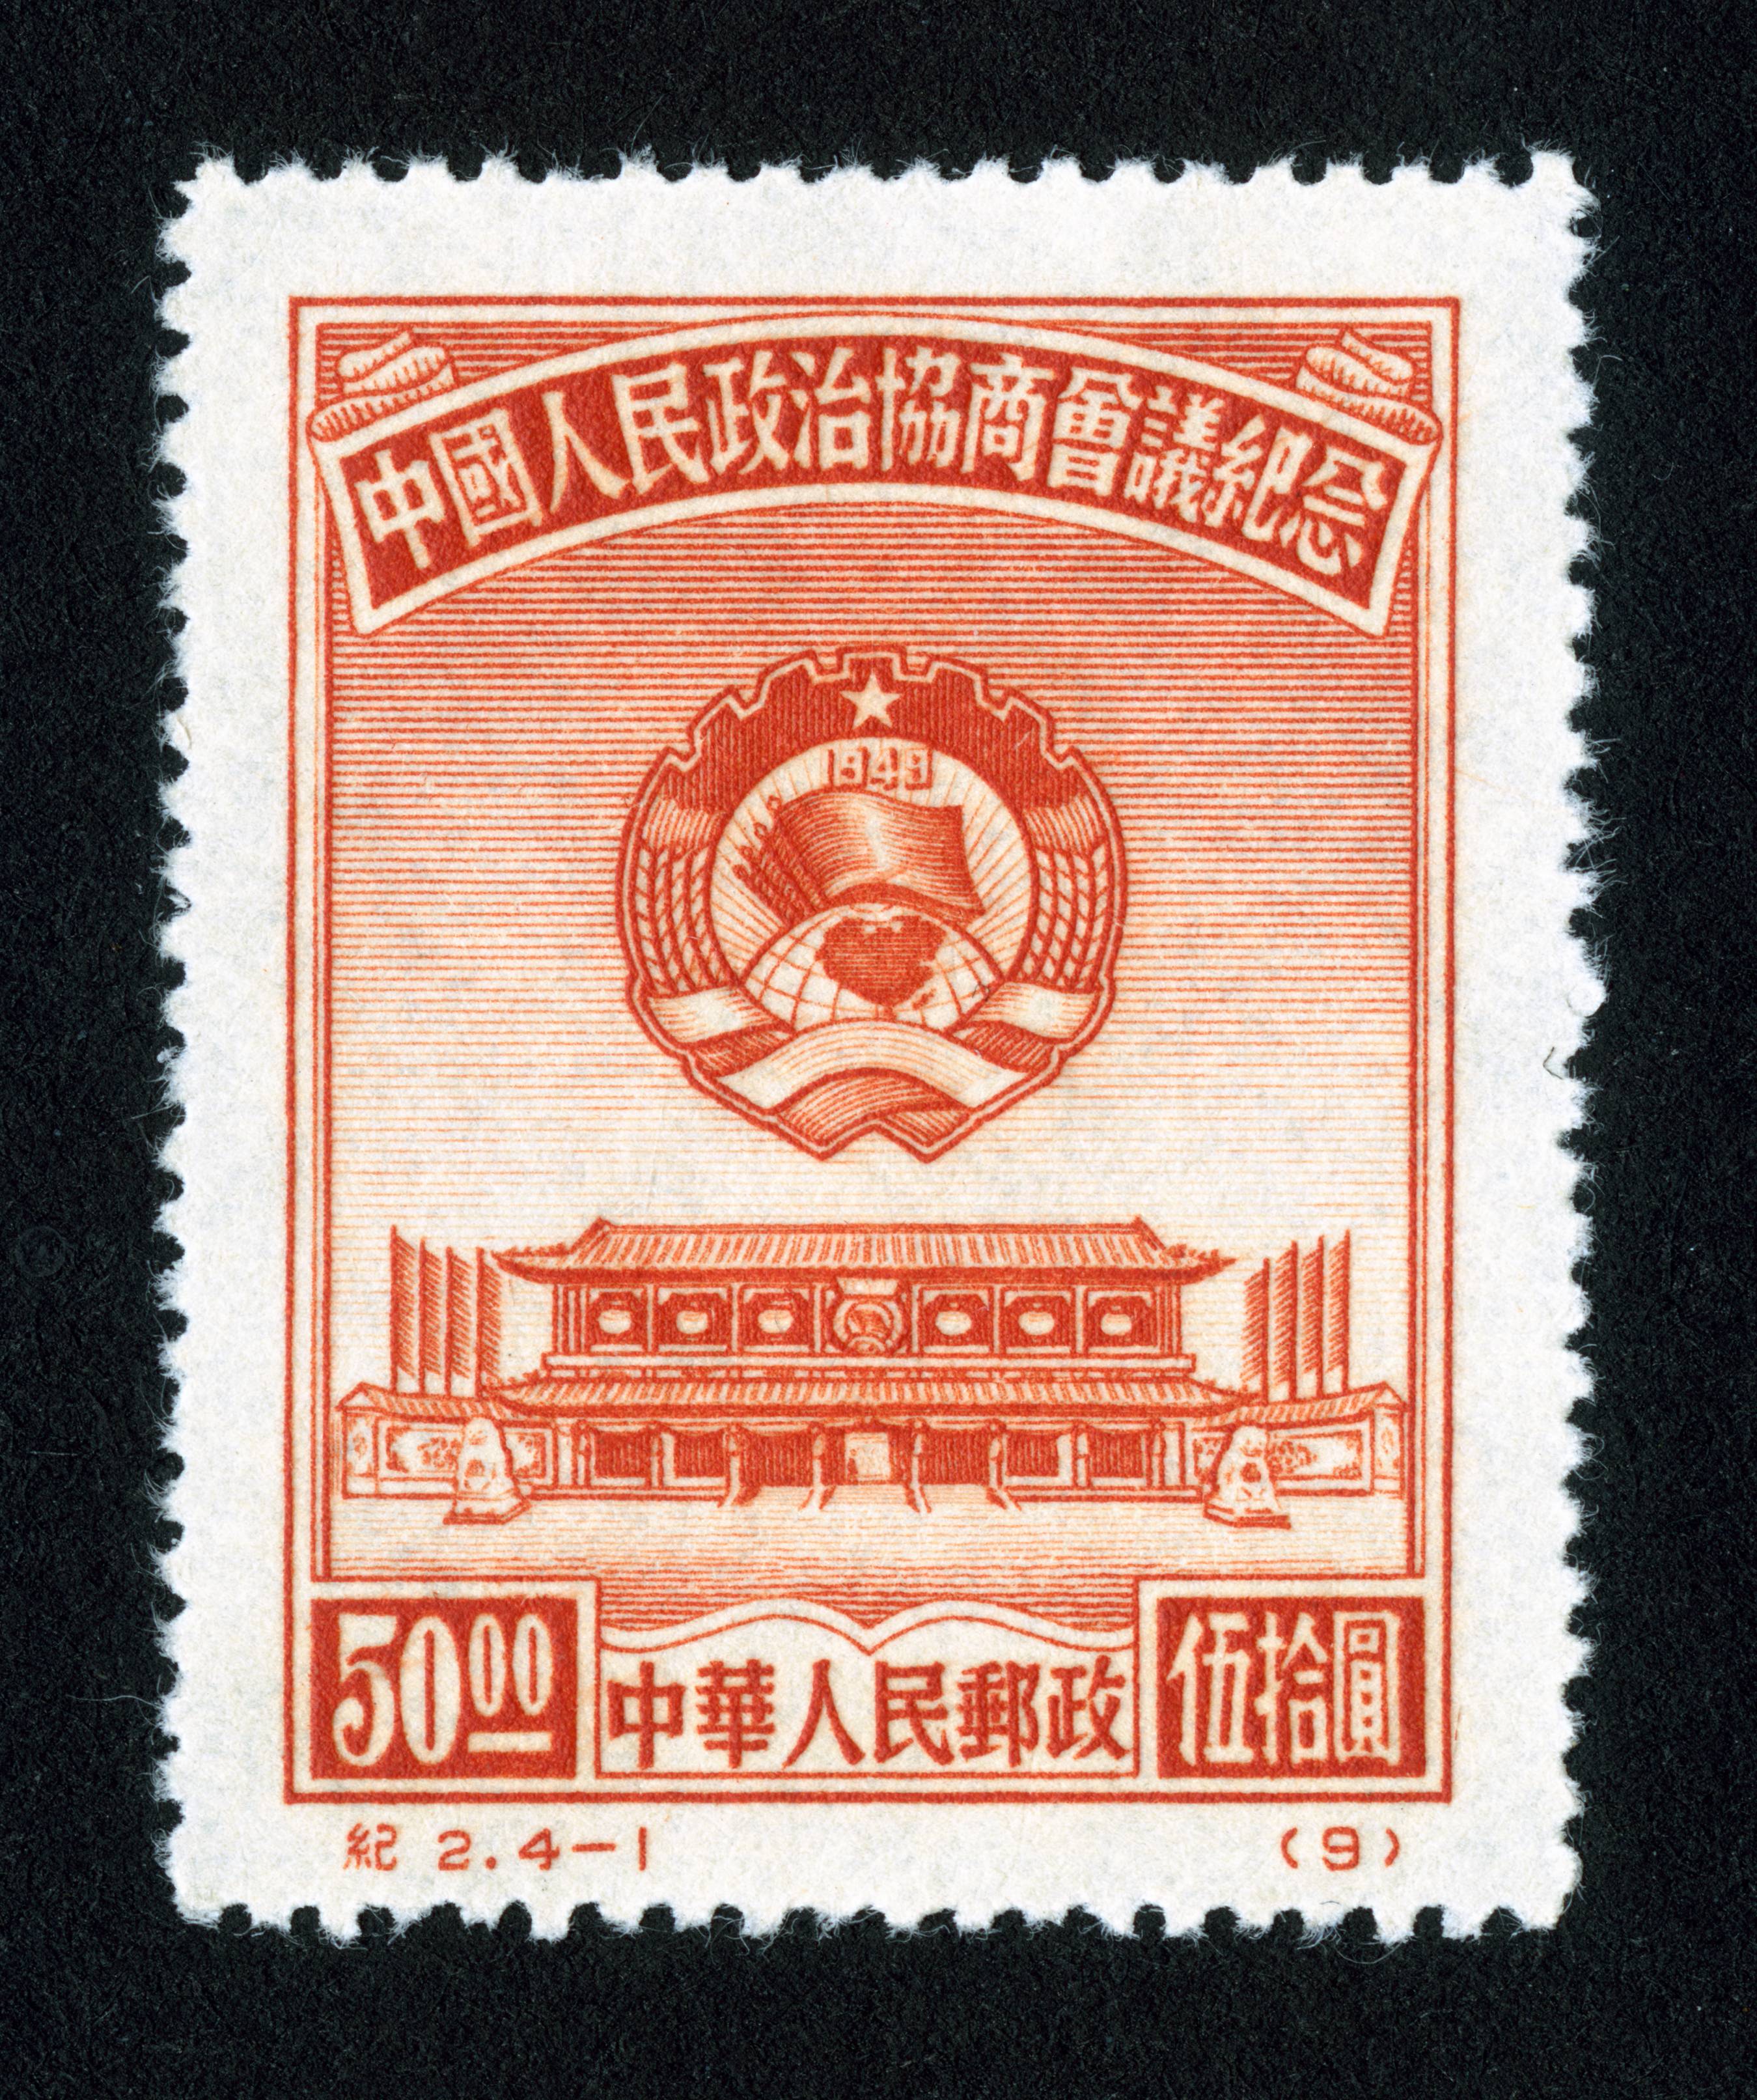 File:Ji2, 4-1, Beijing Xinhuamen and Emblem of CPPCC, 1950.jpg 